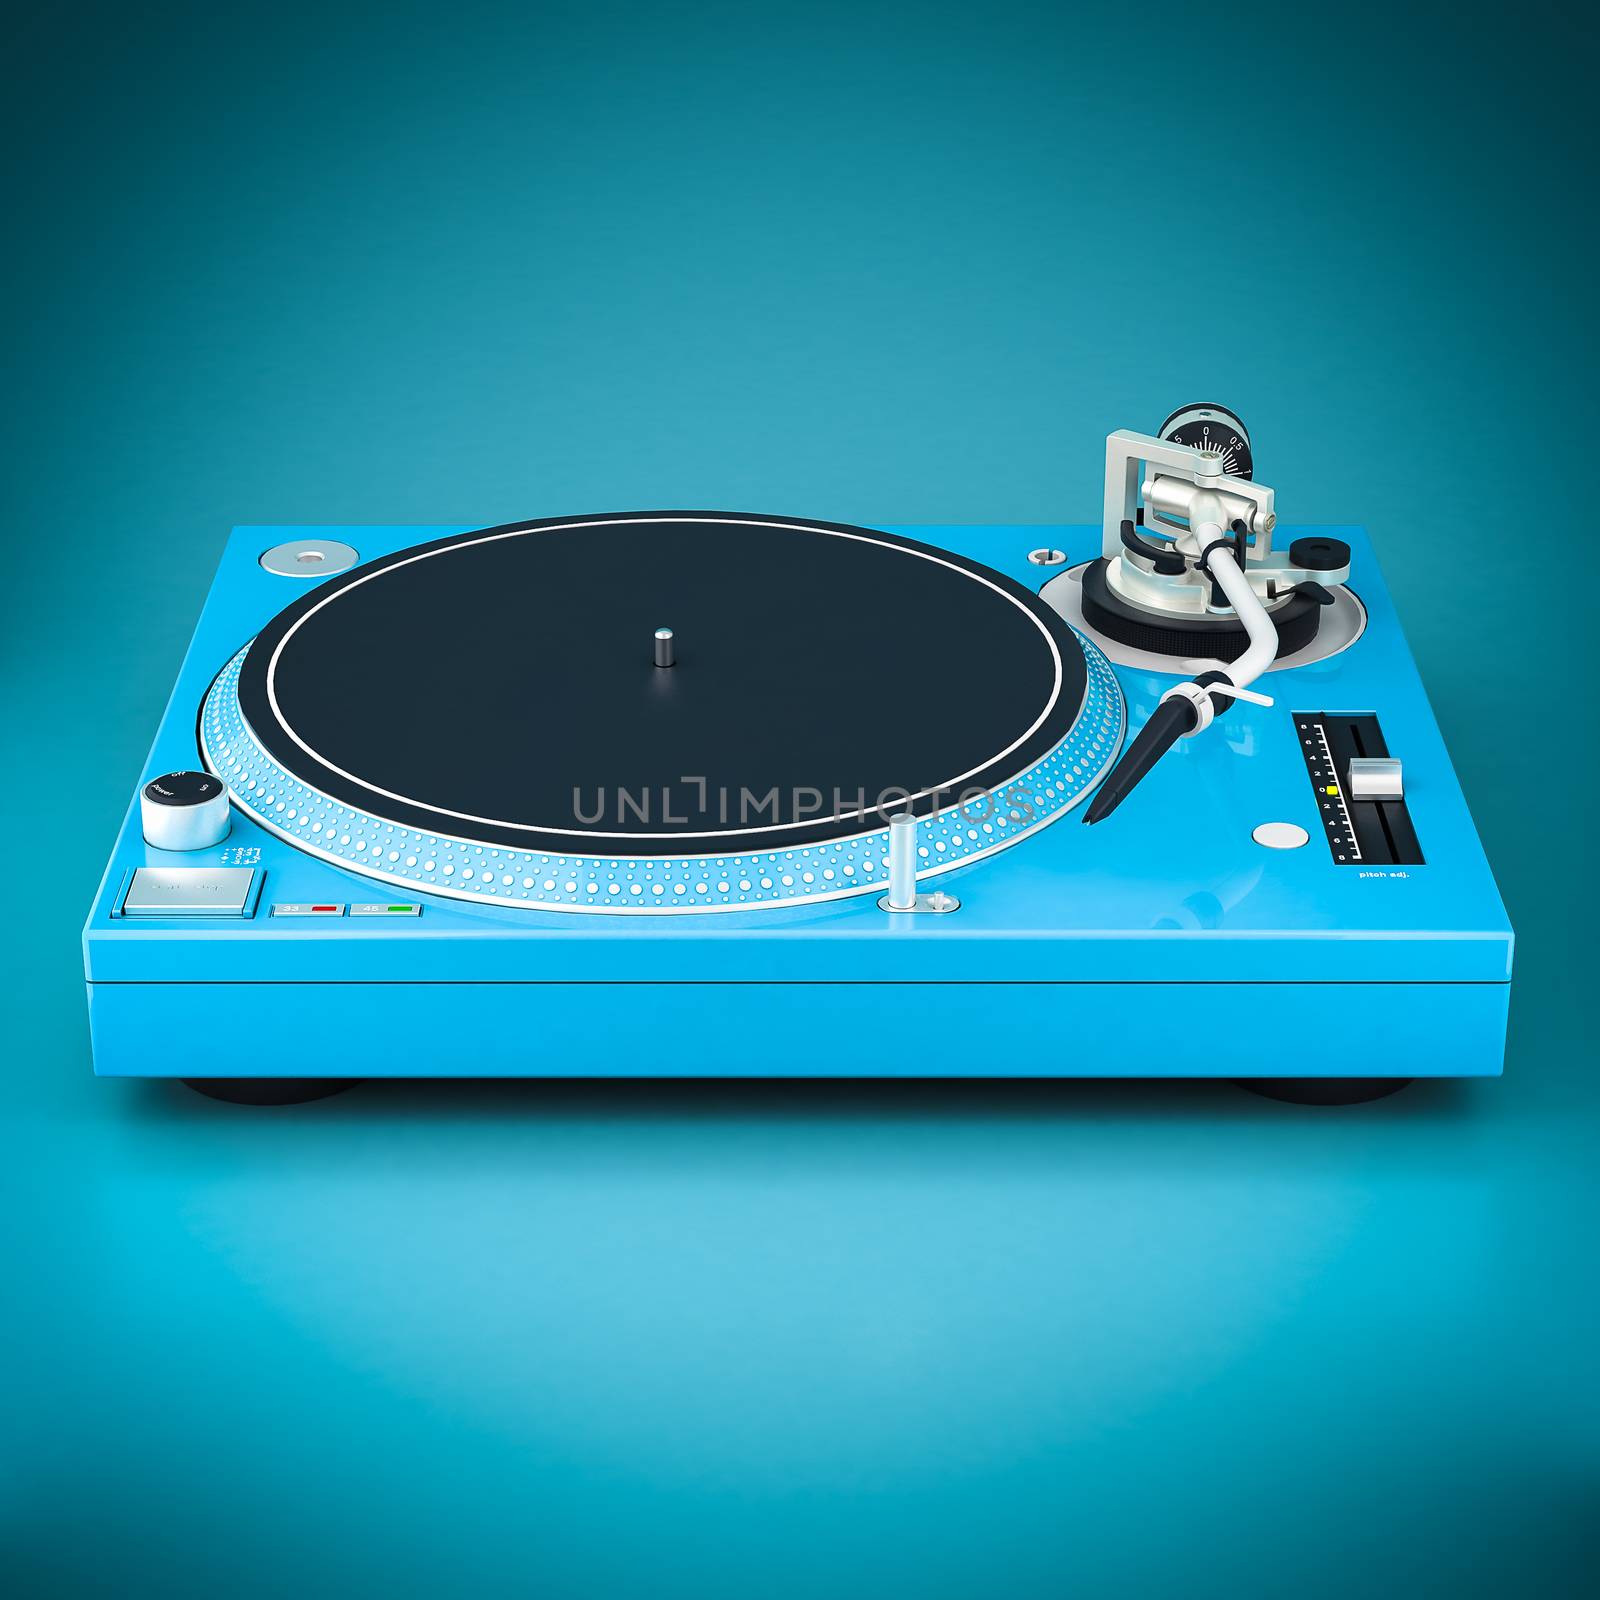 Beautiful DJ player on a blue background